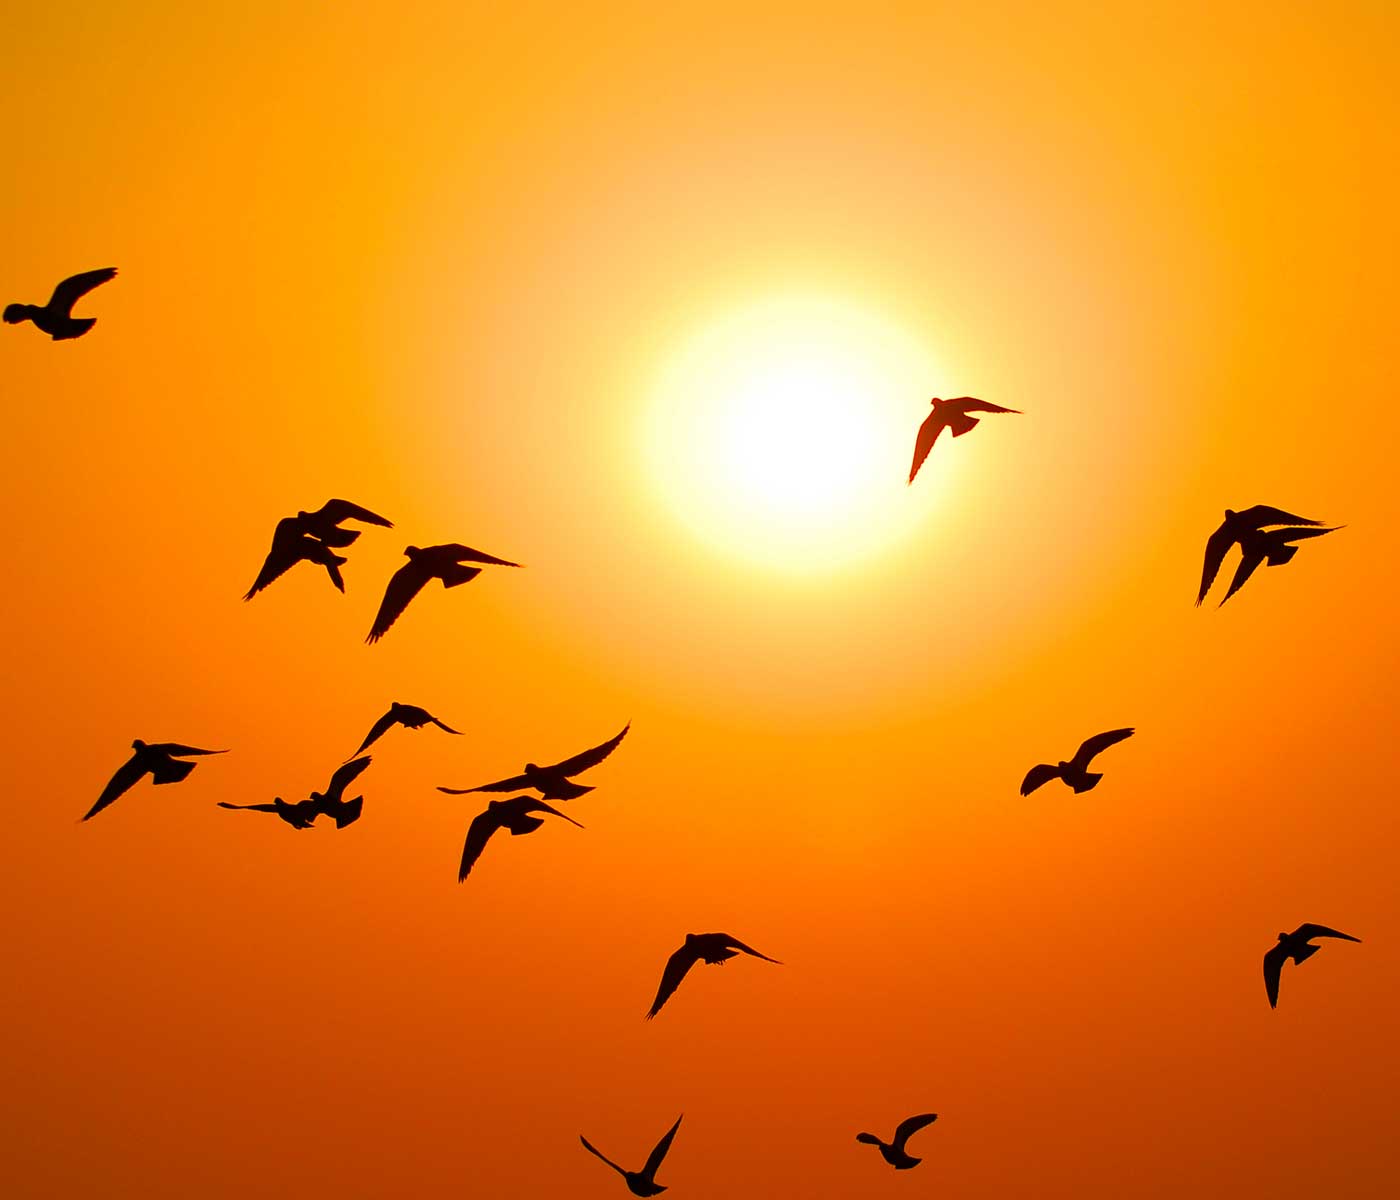 Scientists warn that heat waves are transforming some bird species